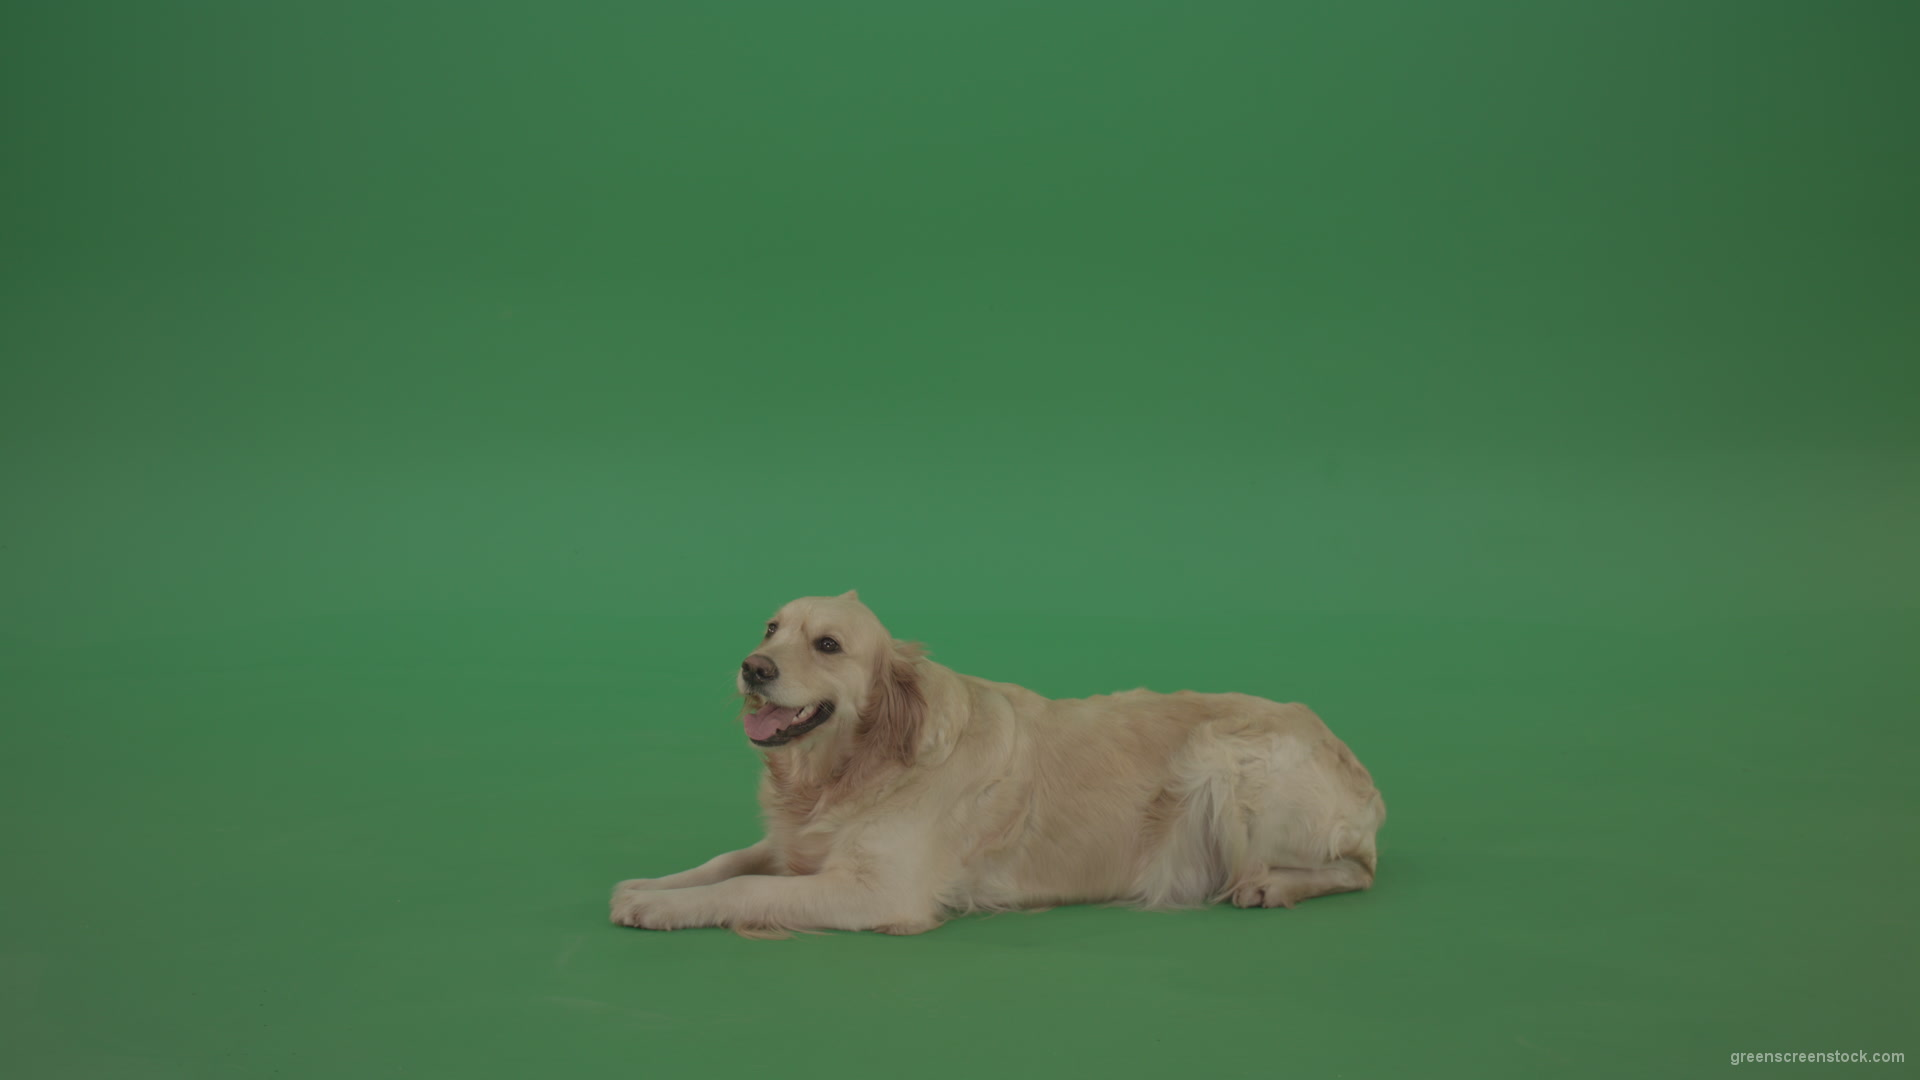 Golden-Retriever-Gun-Dog-Bird-Dog-lying-green-floor-isolated-on-green-screen_004 Green Screen Stock